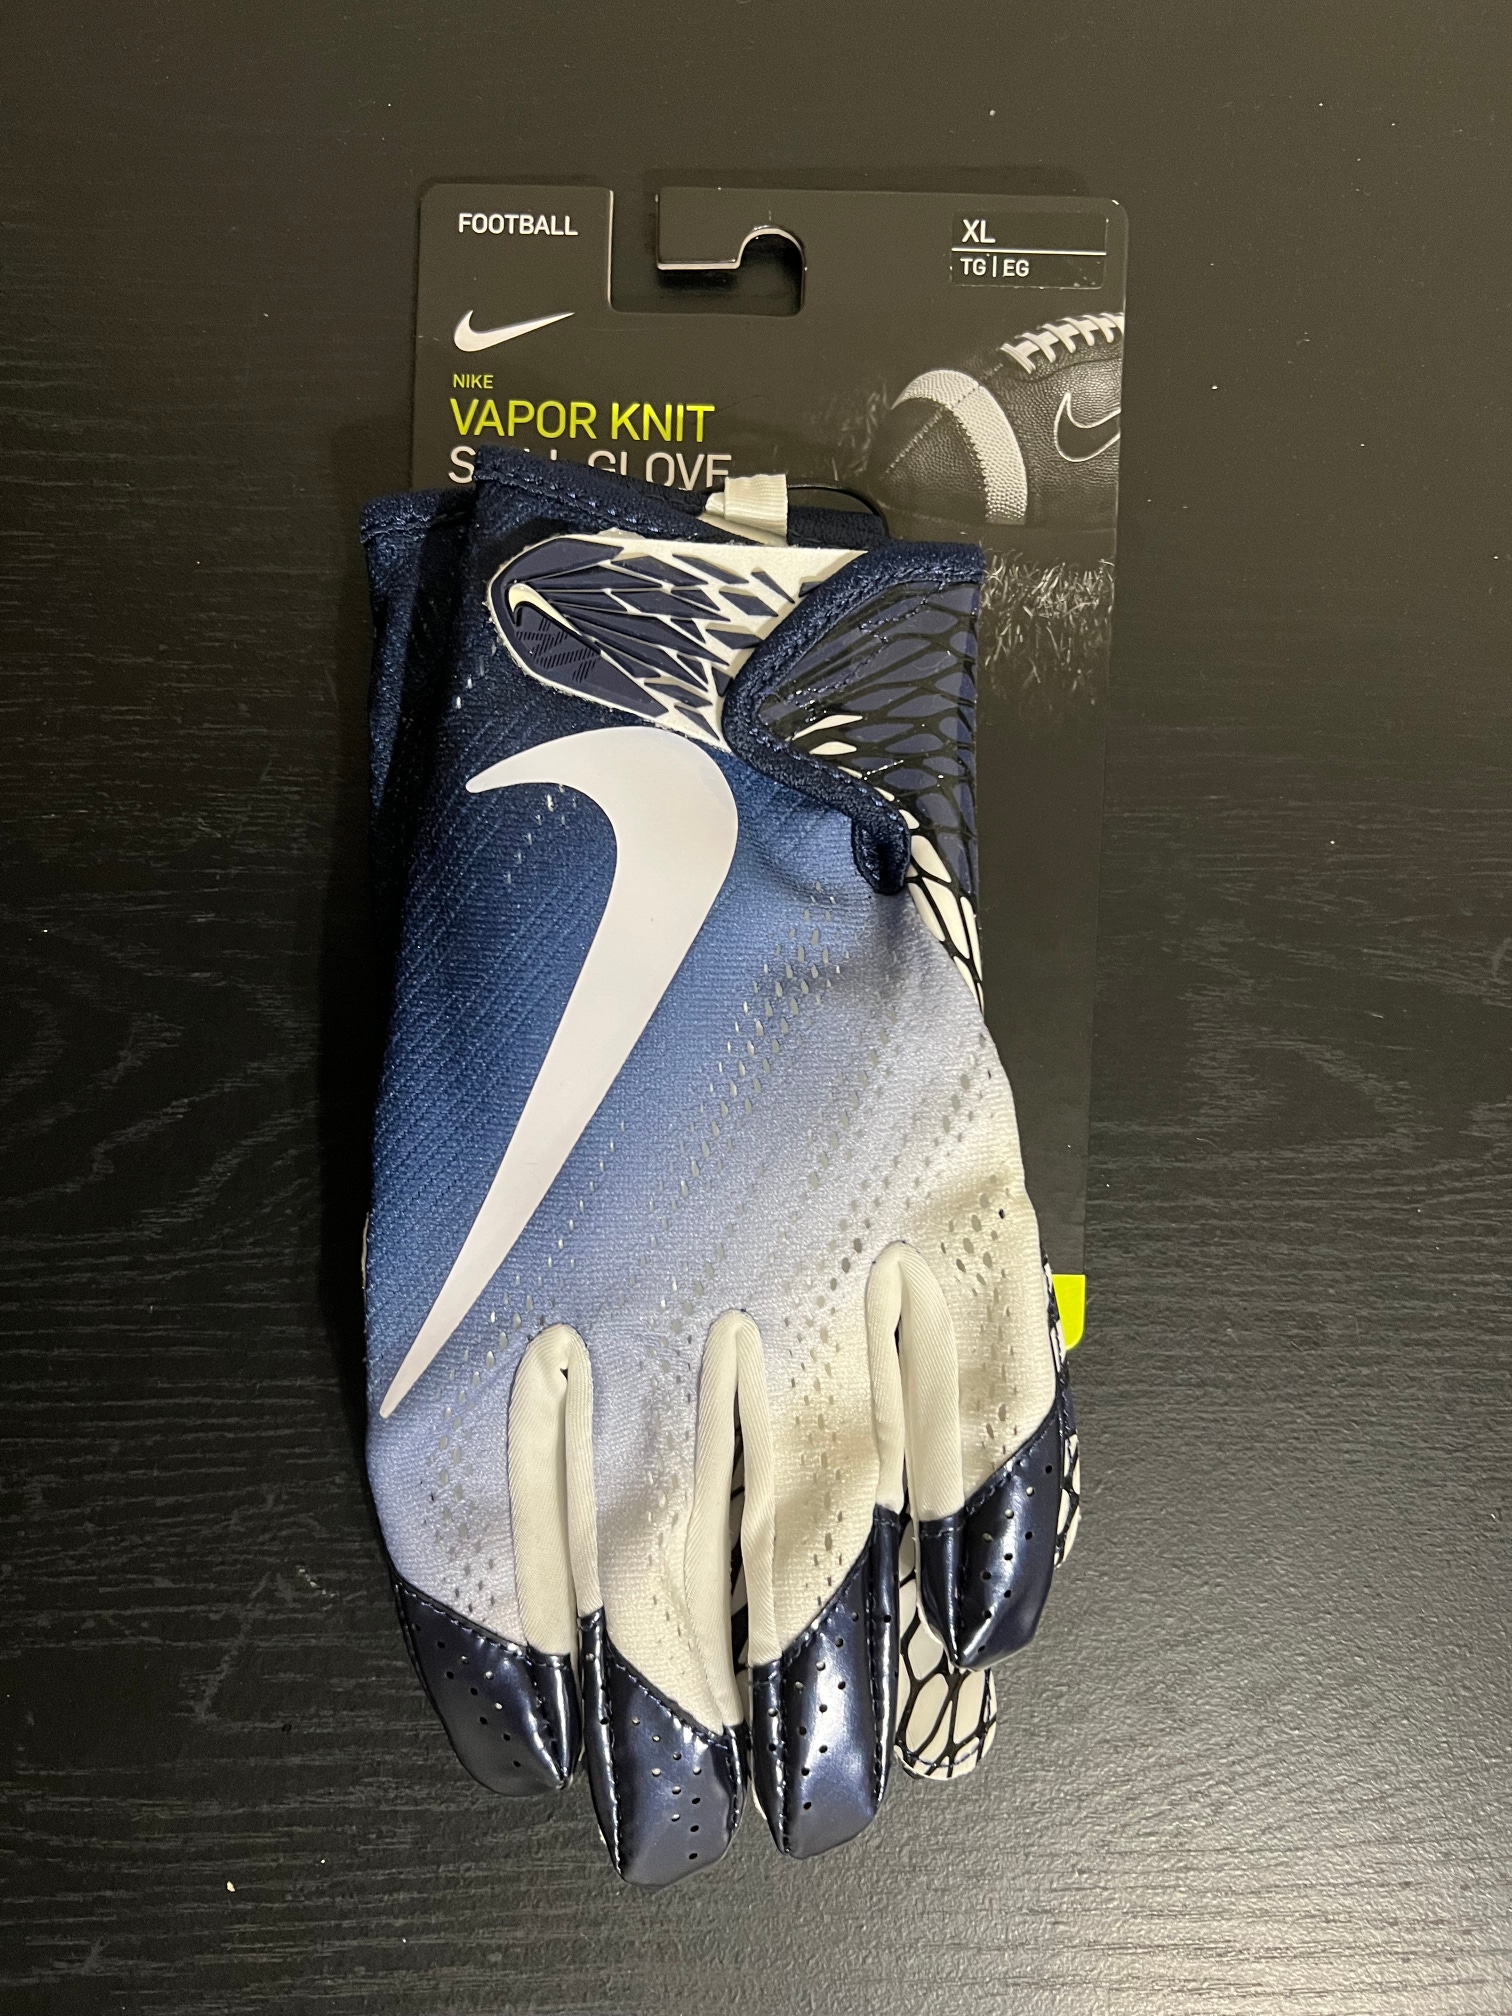 Nike Vapor Knit Skill Glove Men's Football Gloves Size XL Navy/White